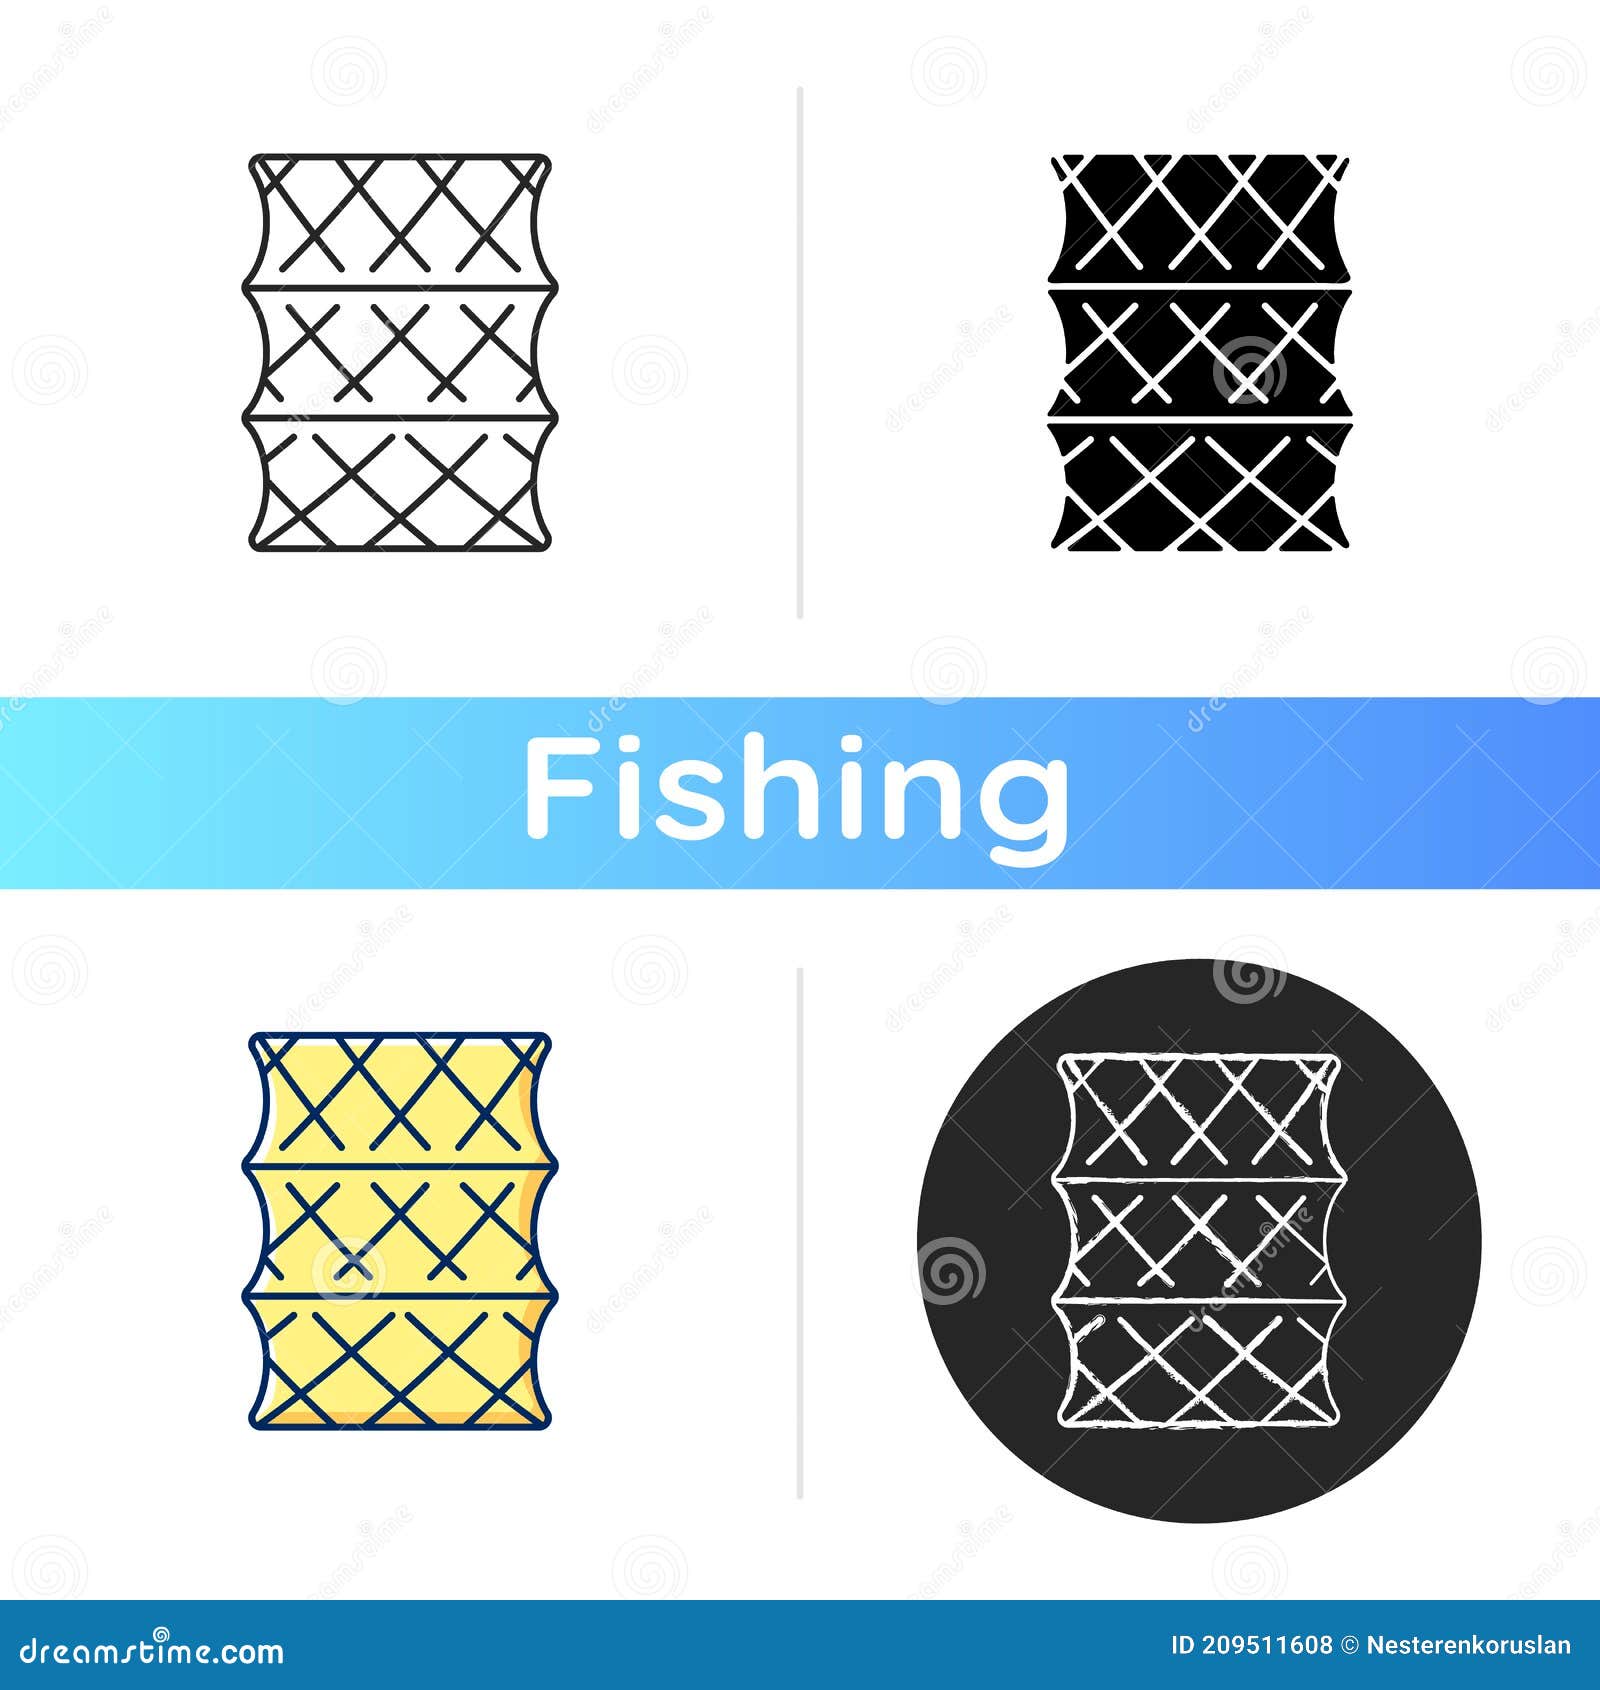 https://thumbs.dreamstime.com/z/fish-trap-icon-trophy-fishing-basic-equipment-fishers-gear-saving-fresh-sea-food-tournament-linear-black-rgb-color-styles-209511608.jpg